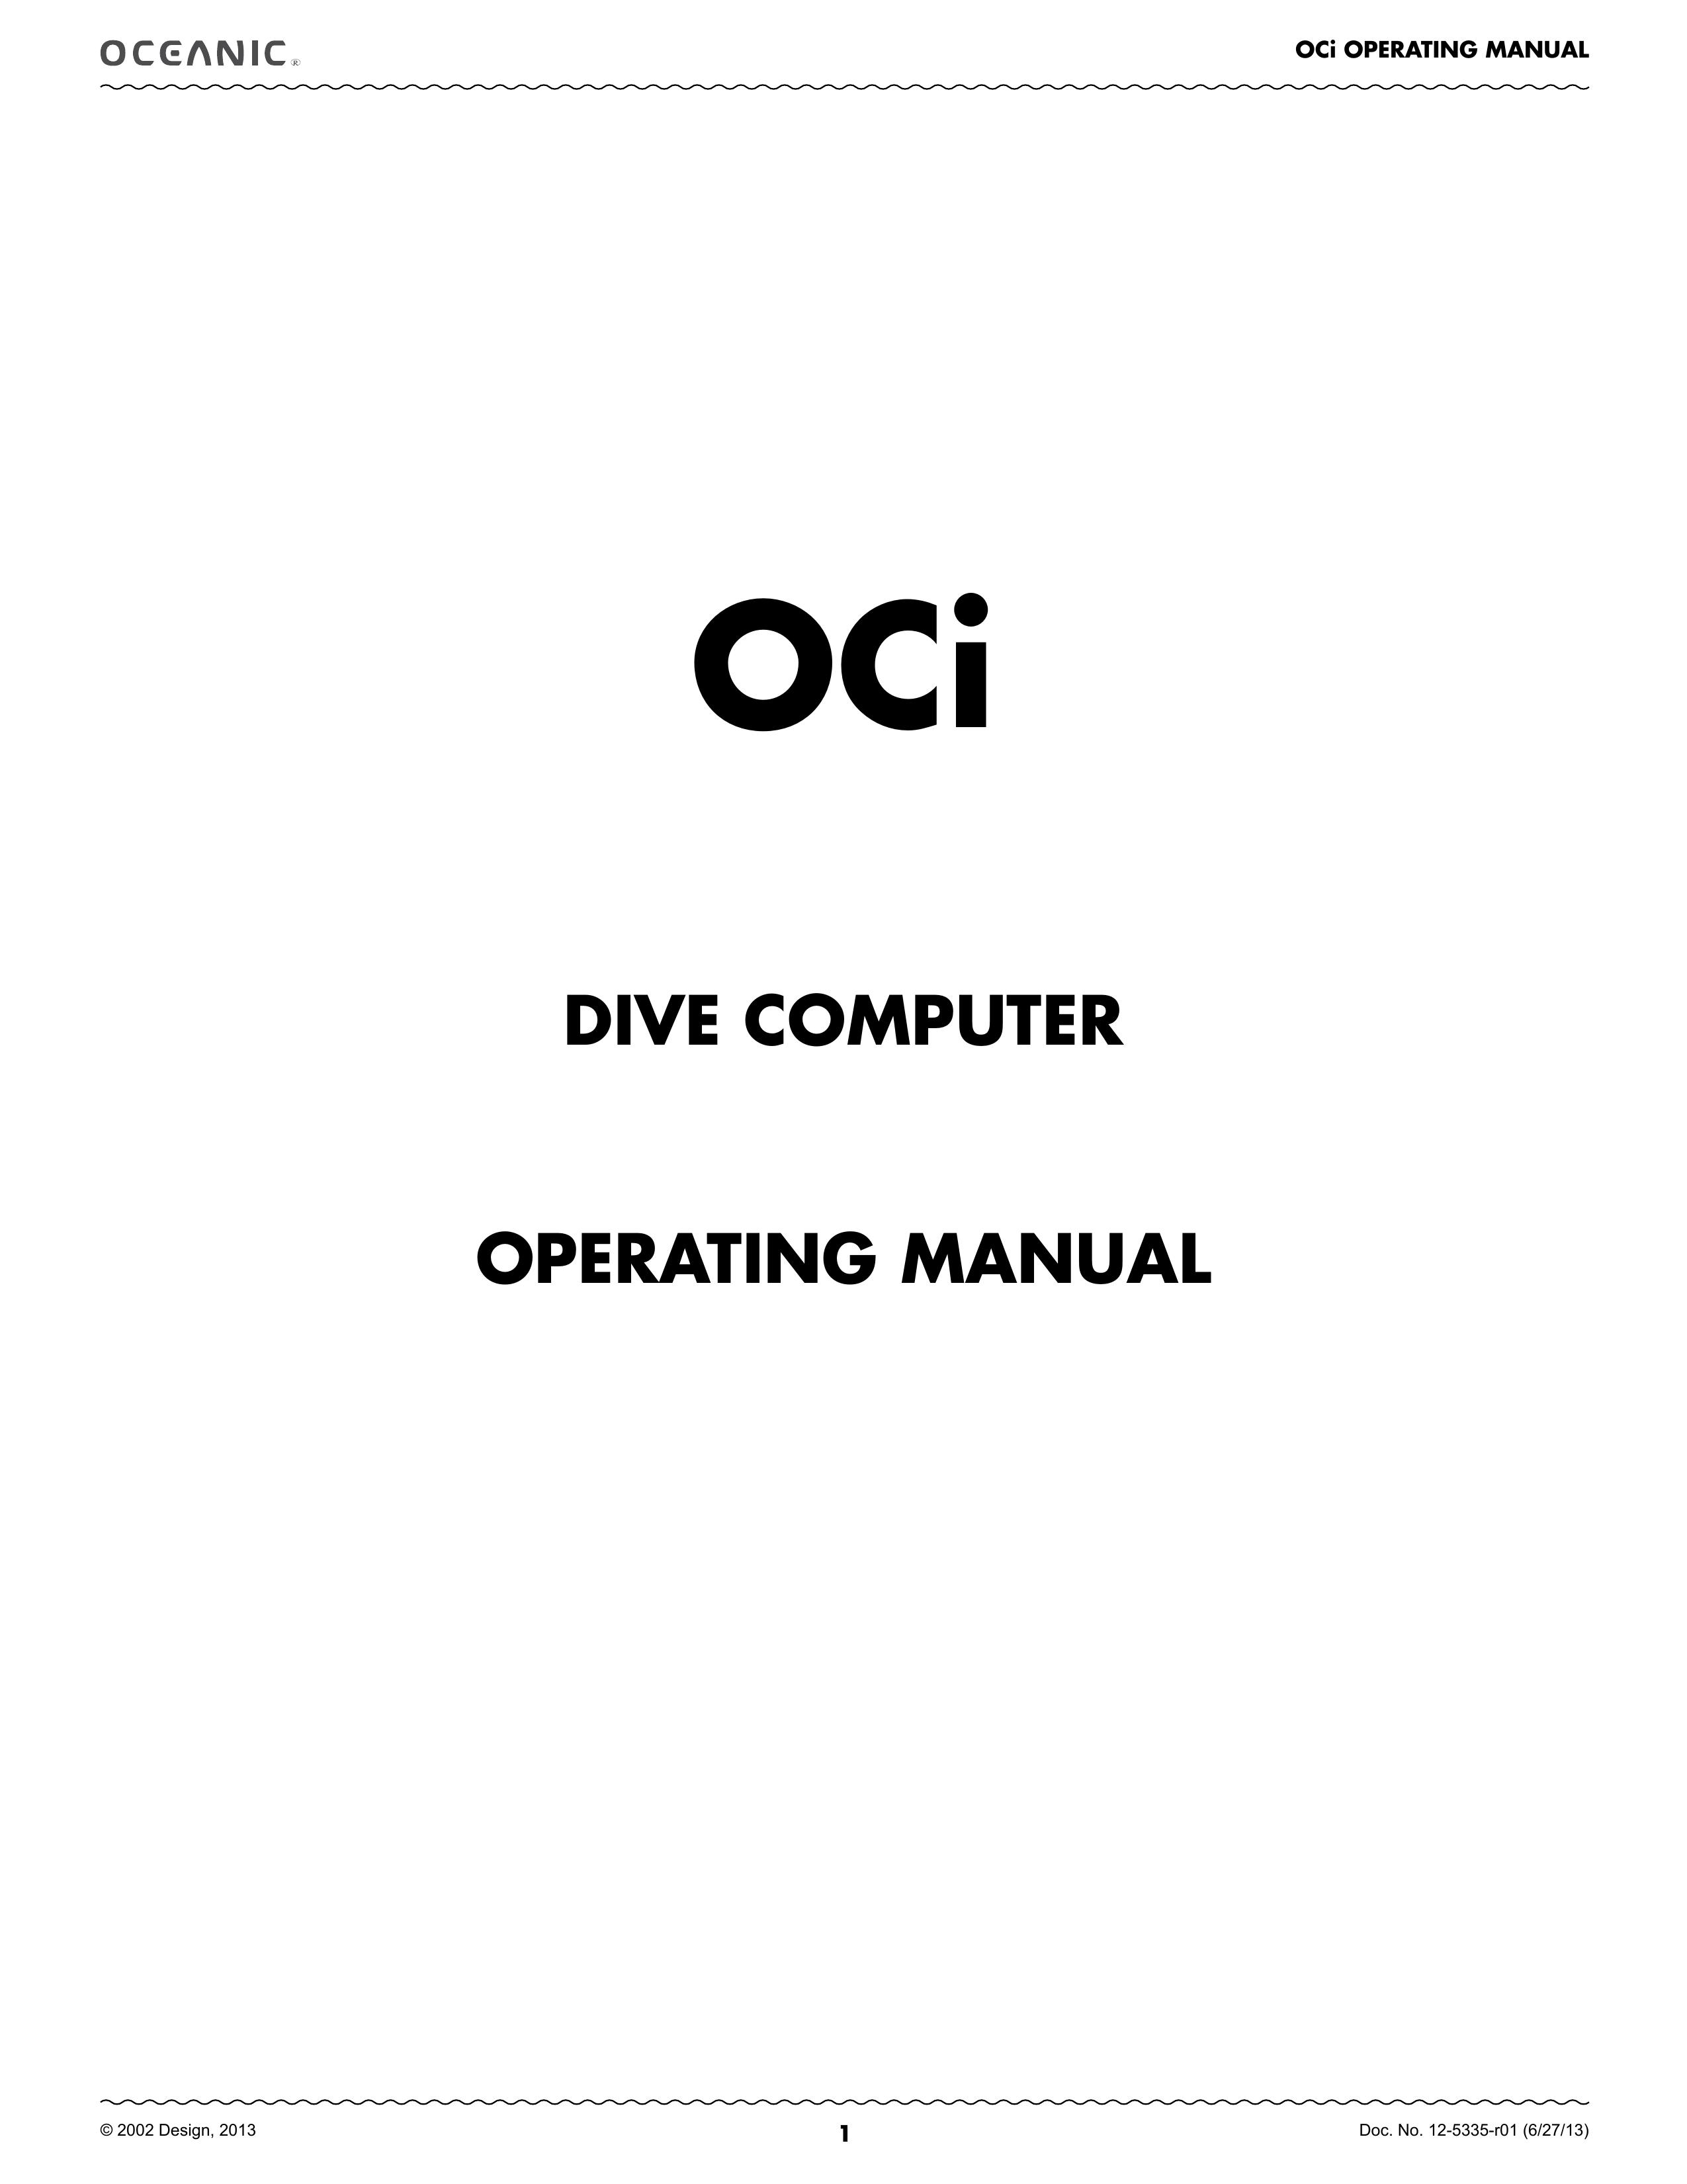 Oceanic 04-8792-24 Scuba Diving Equipment User Manual